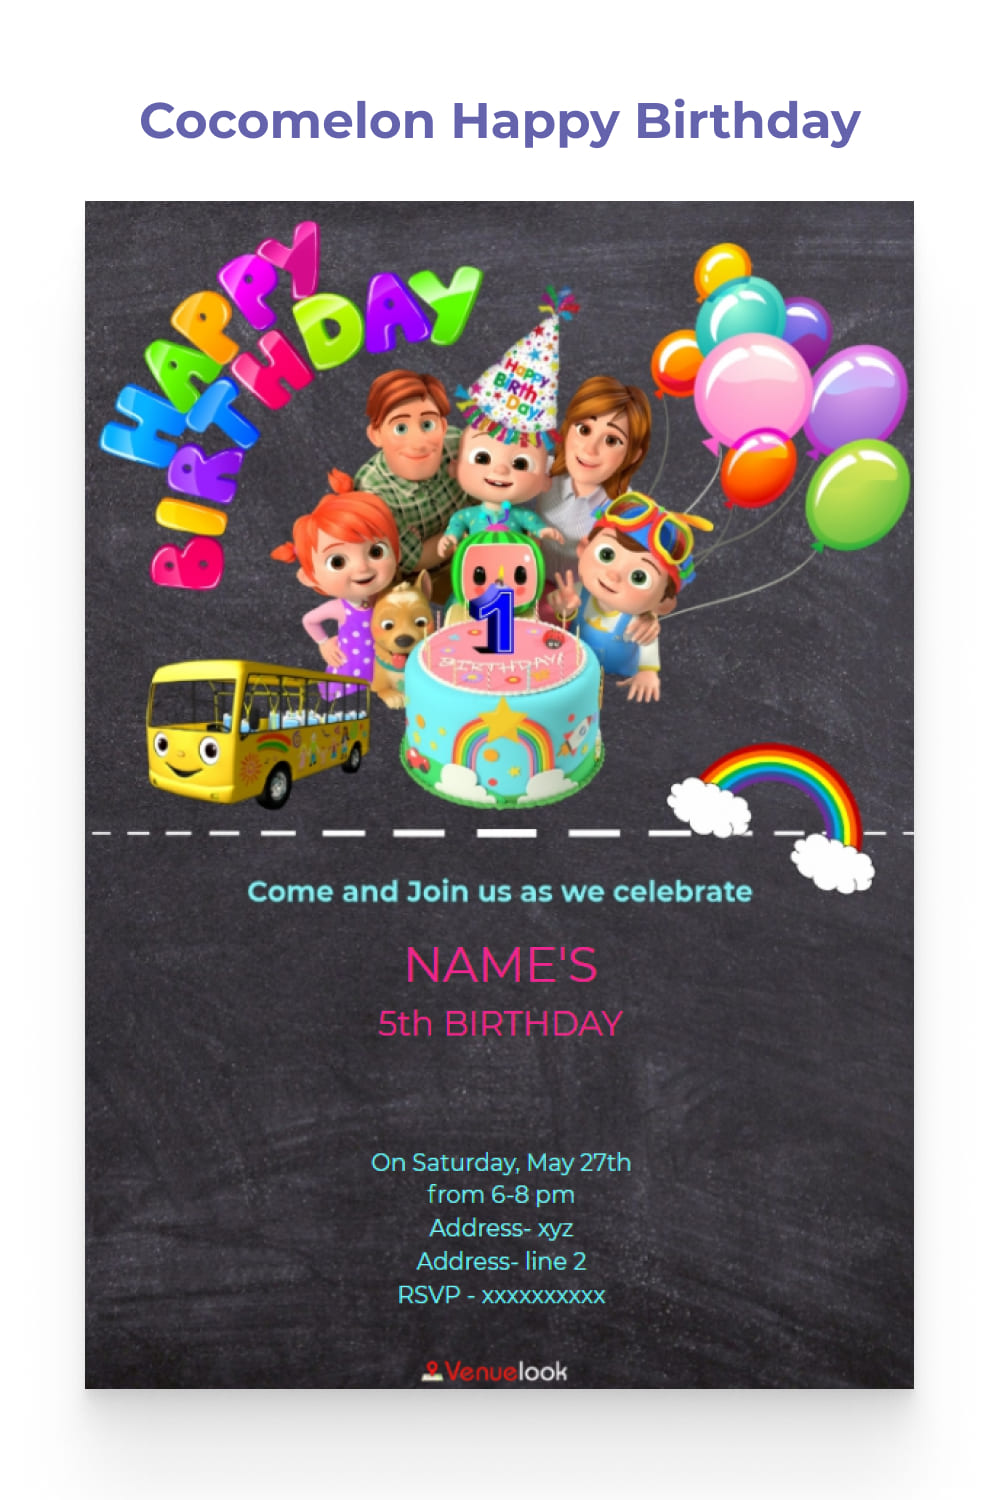 Premium and free birthday invitation templates